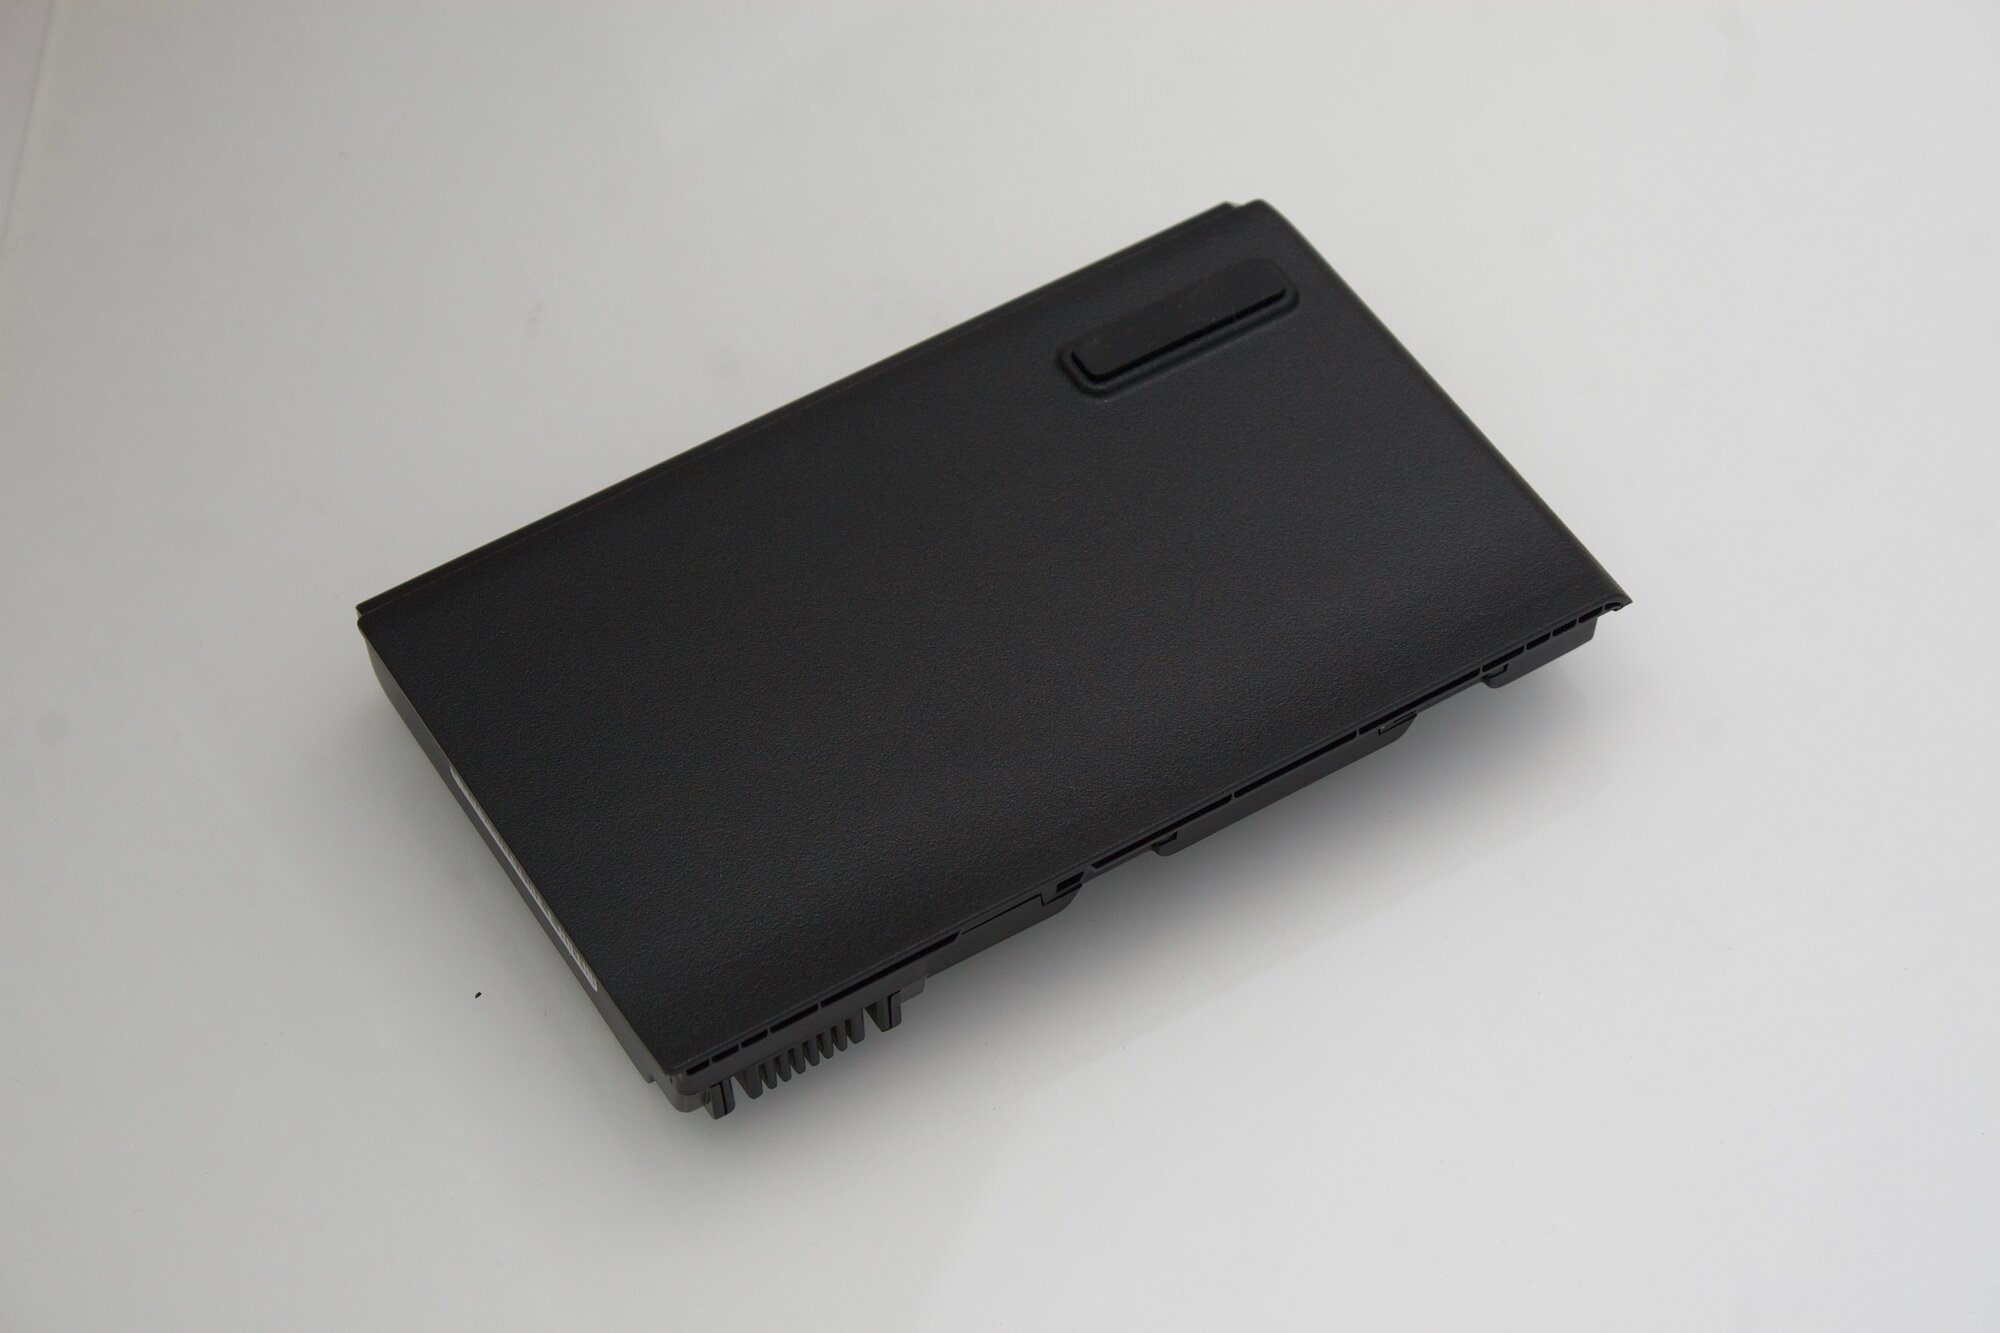 Аккумулятор для ноутбука Acer GRAPE34